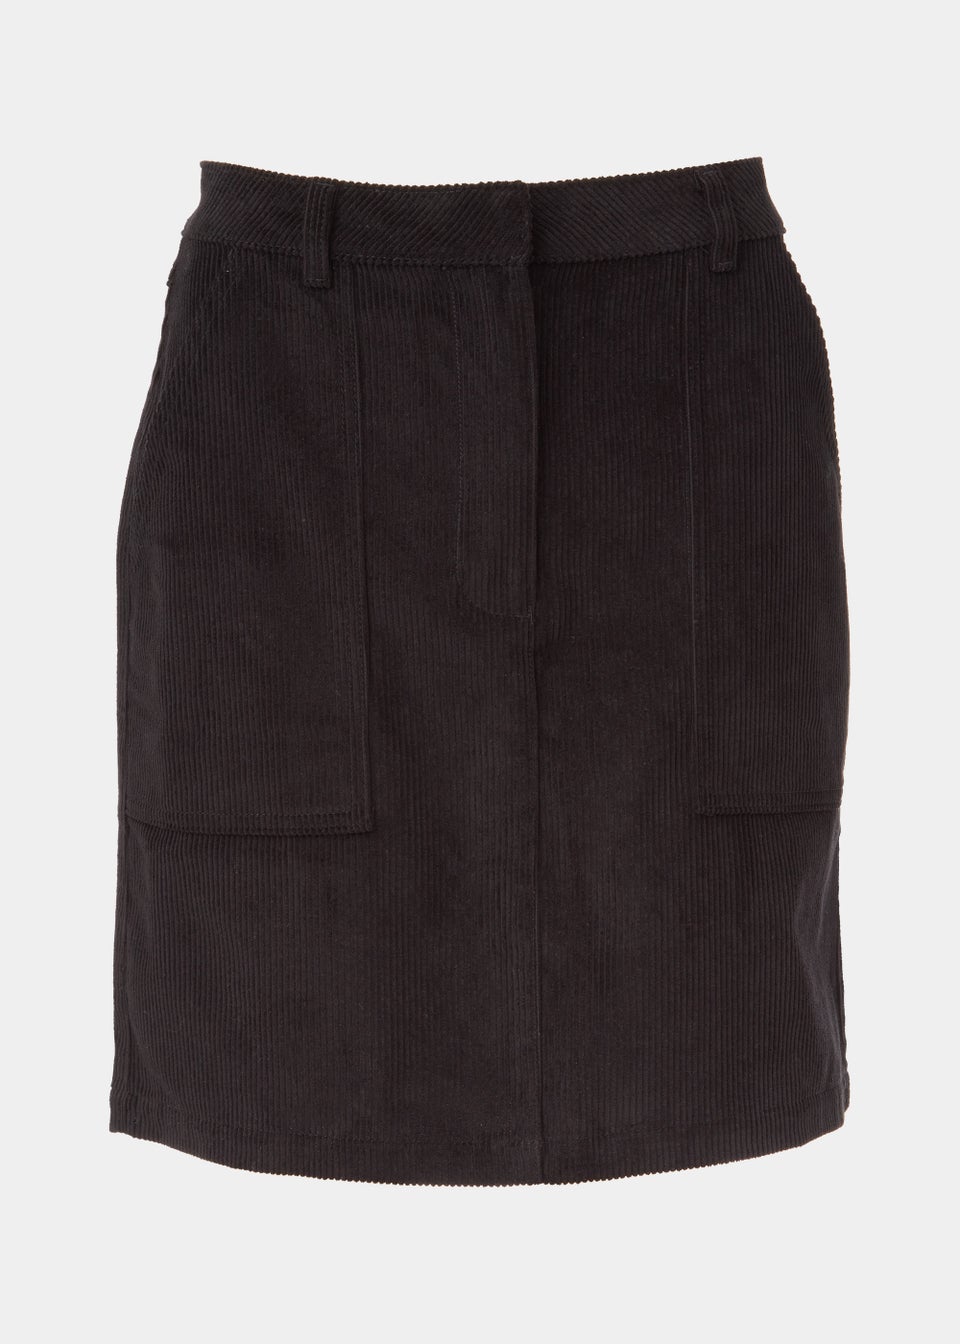 Black Cord Skirt - Matalan